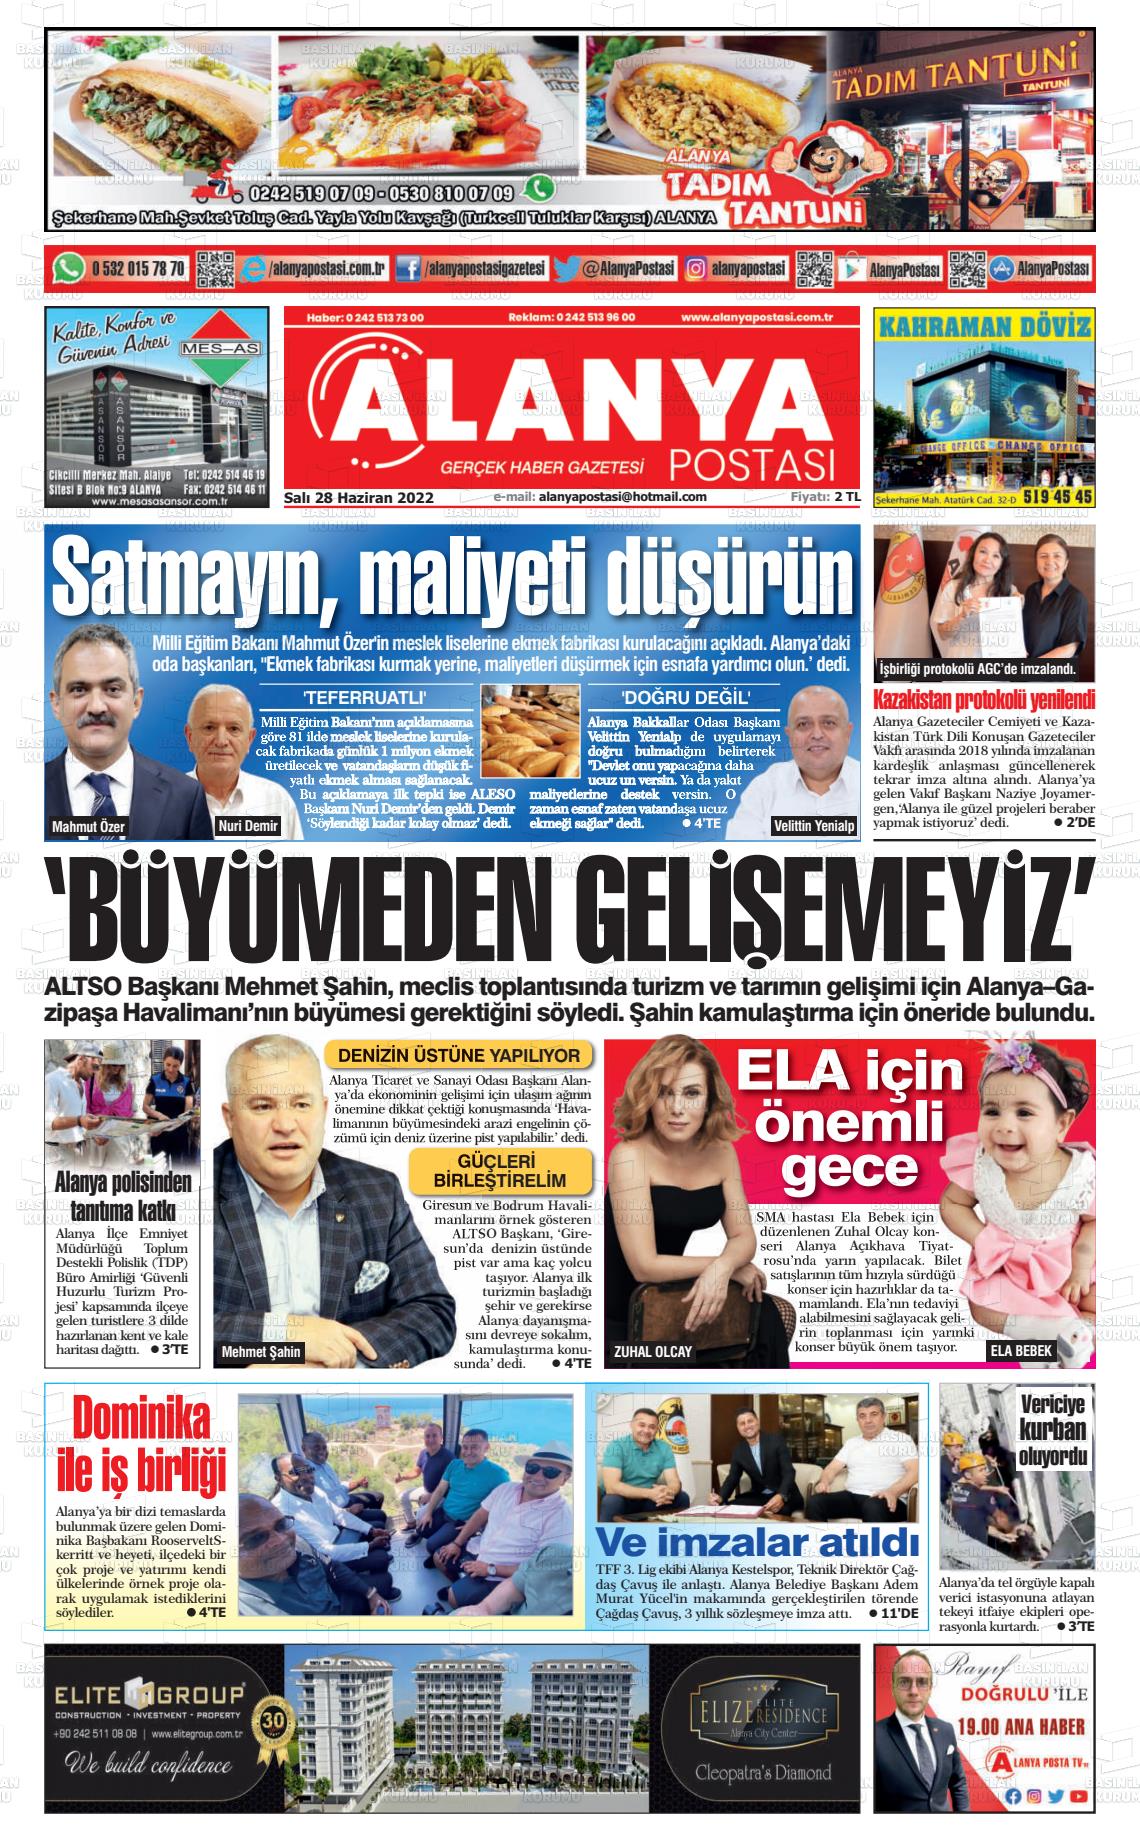 28 Haziran 2022 Alanya Postası Gazete Manşeti